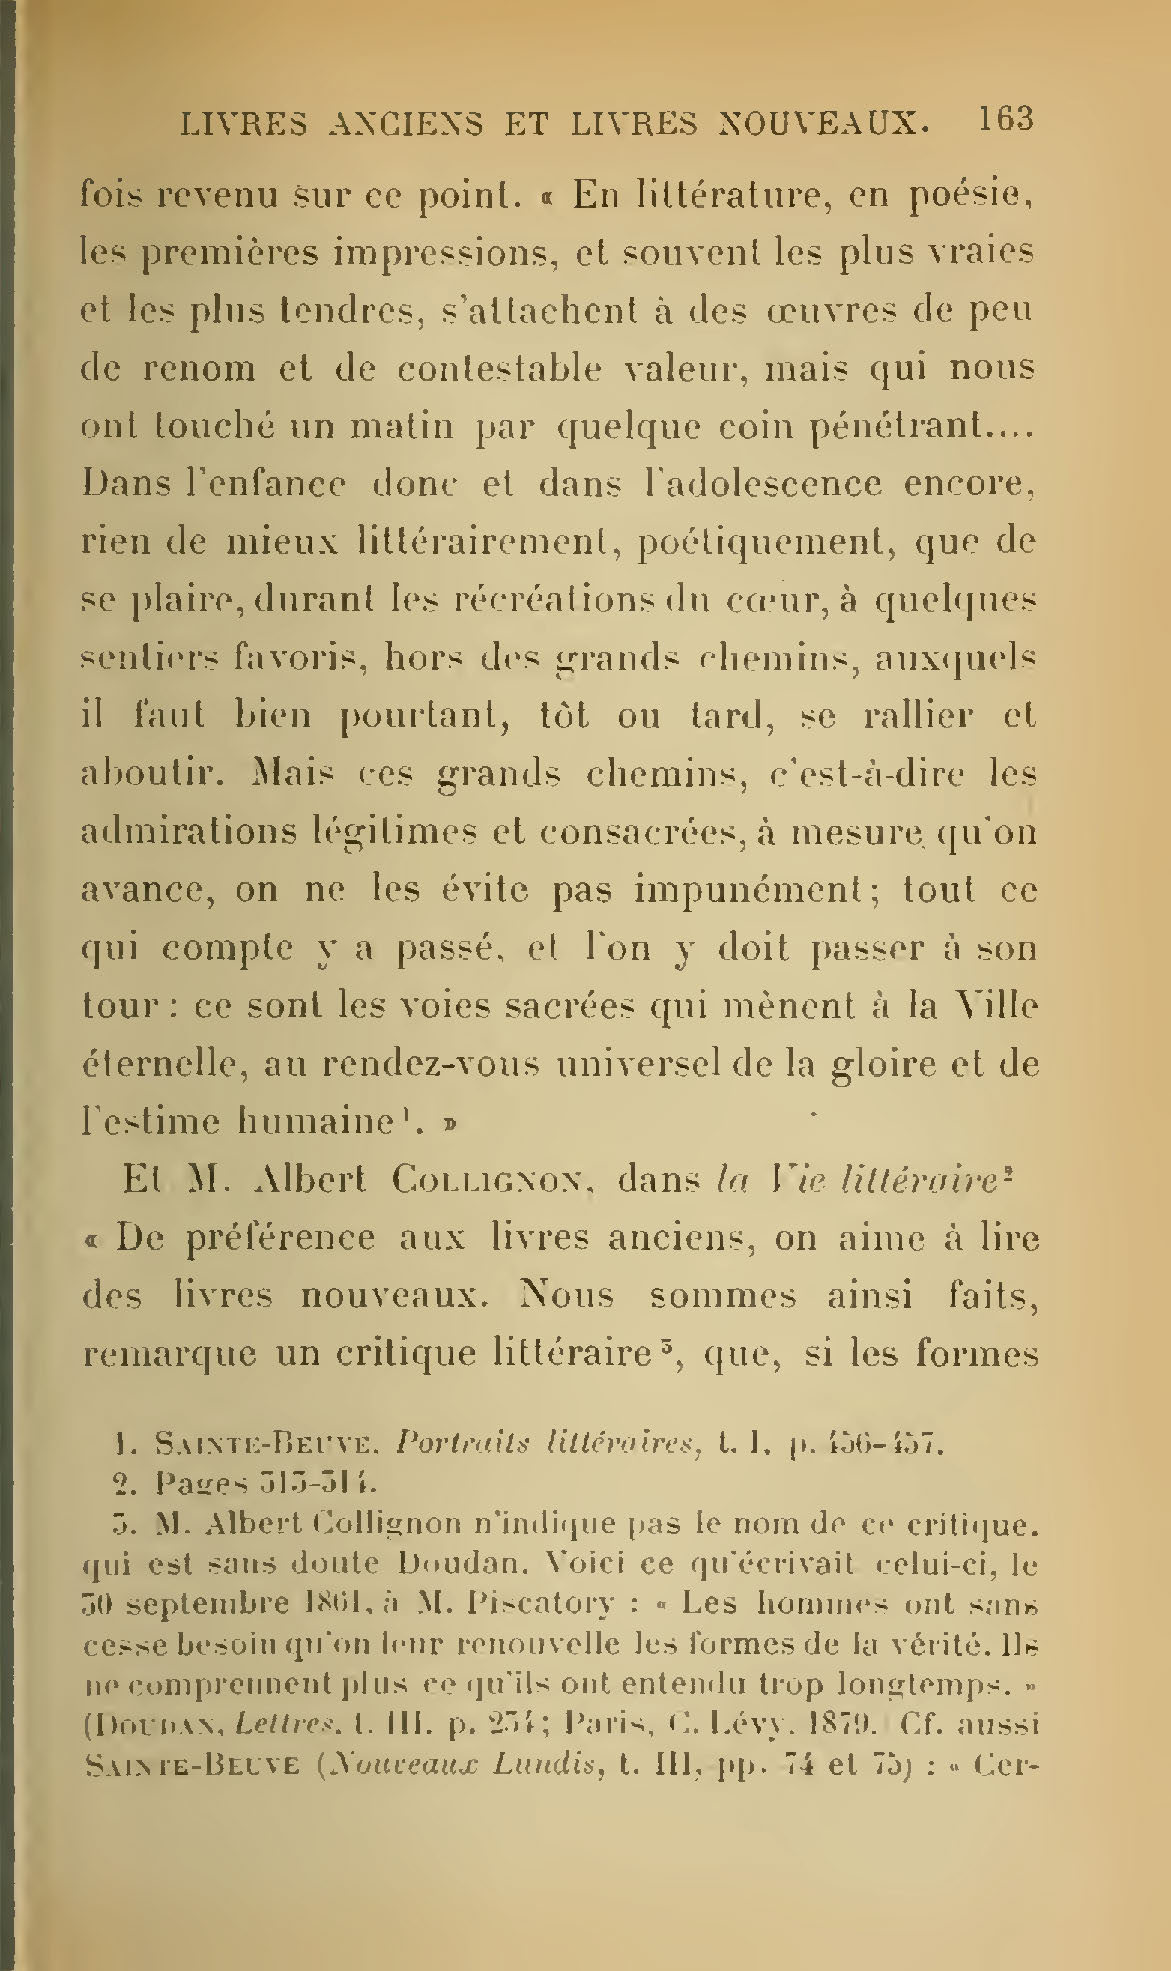 Albert Cim, Le Livre, t. II, p. 163.